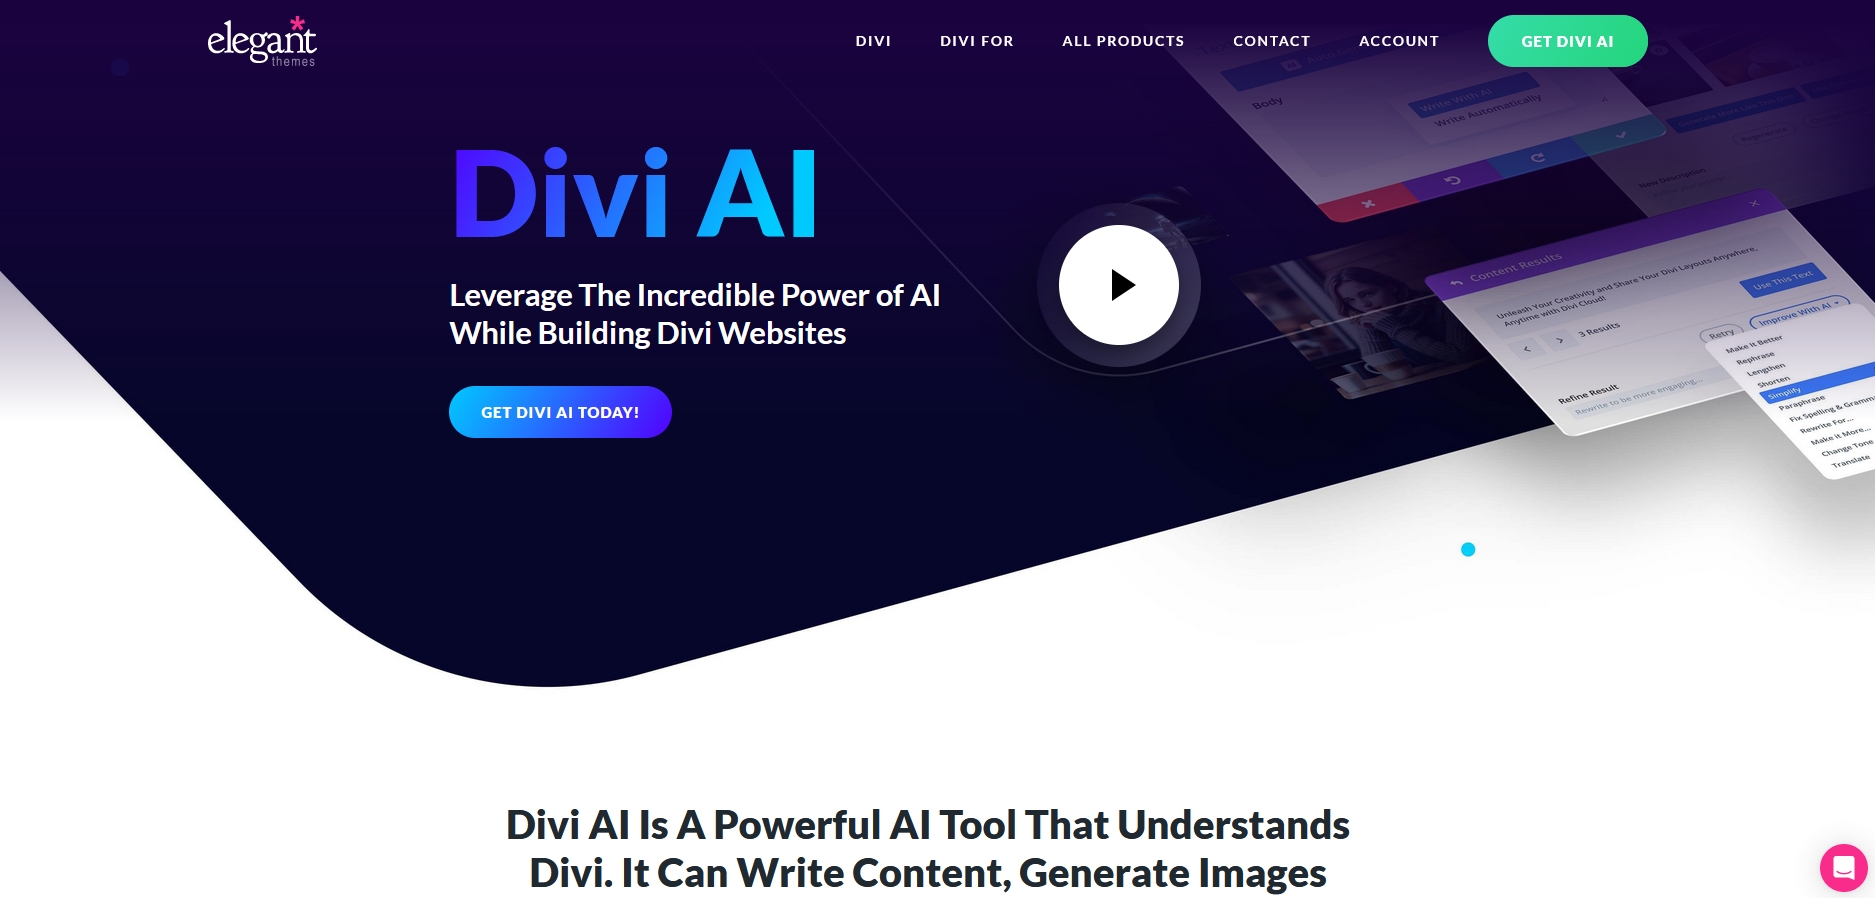 What is Divi AI